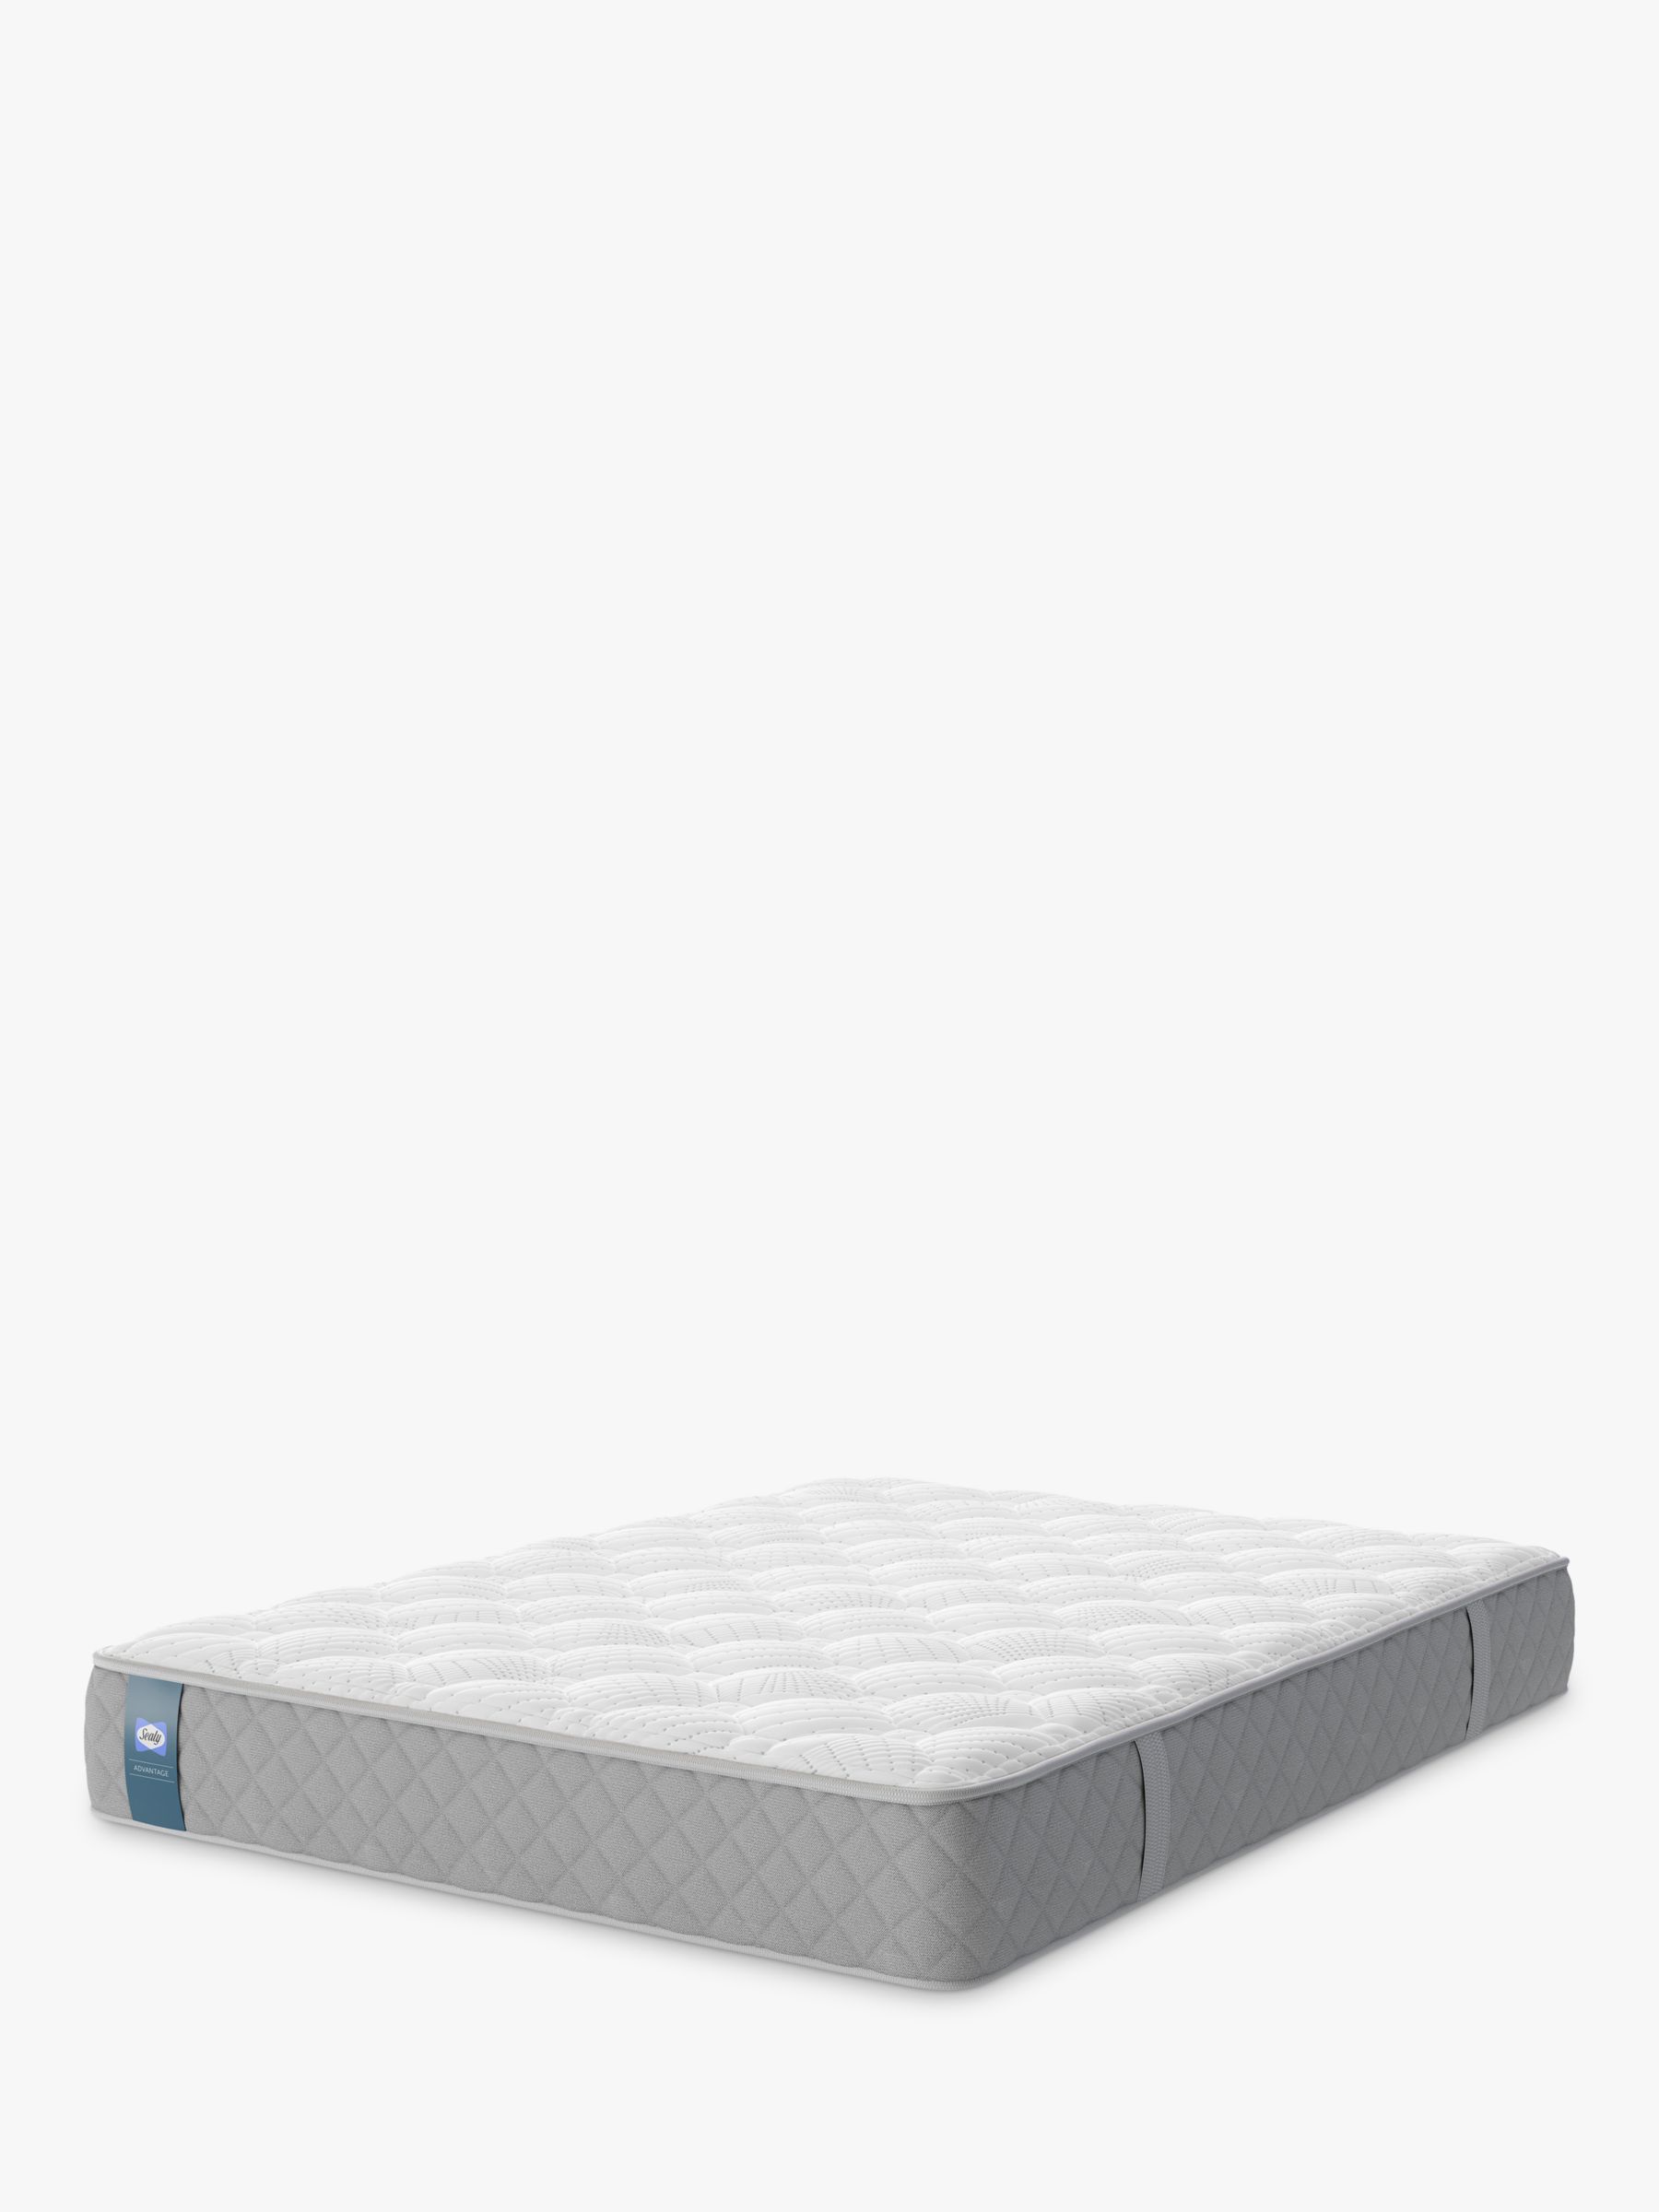 Photo of Sealy advantage upton mattress regular/firmer tension single